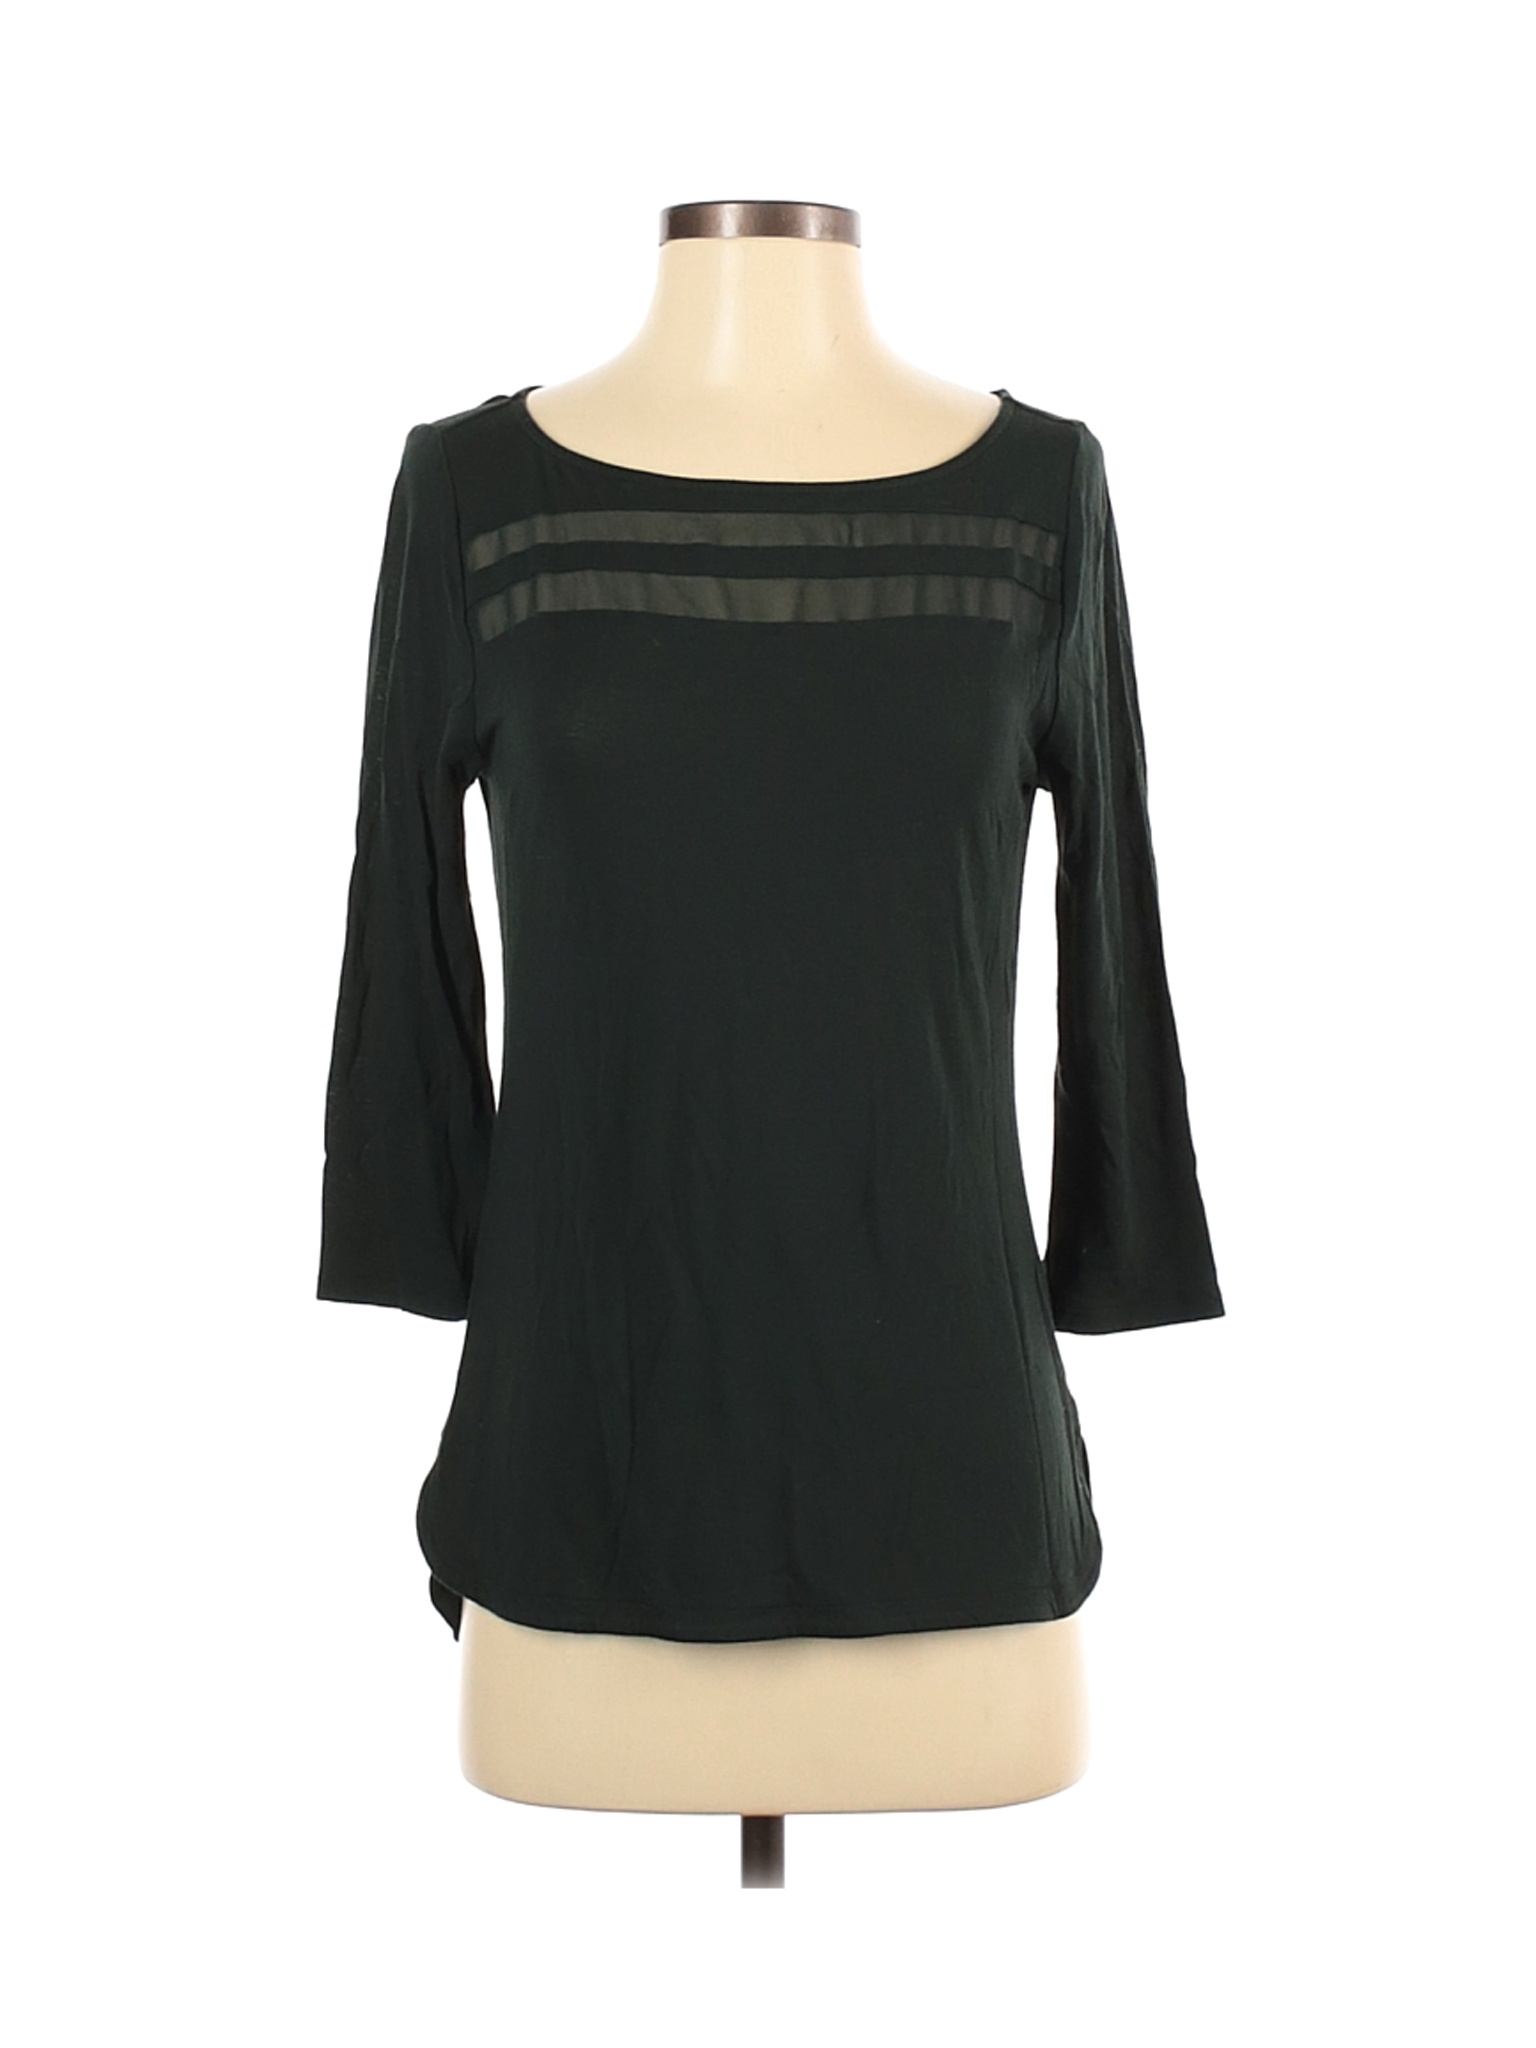 Ann Taylor Factory Women Green 3/4 Sleeve Top S | eBay